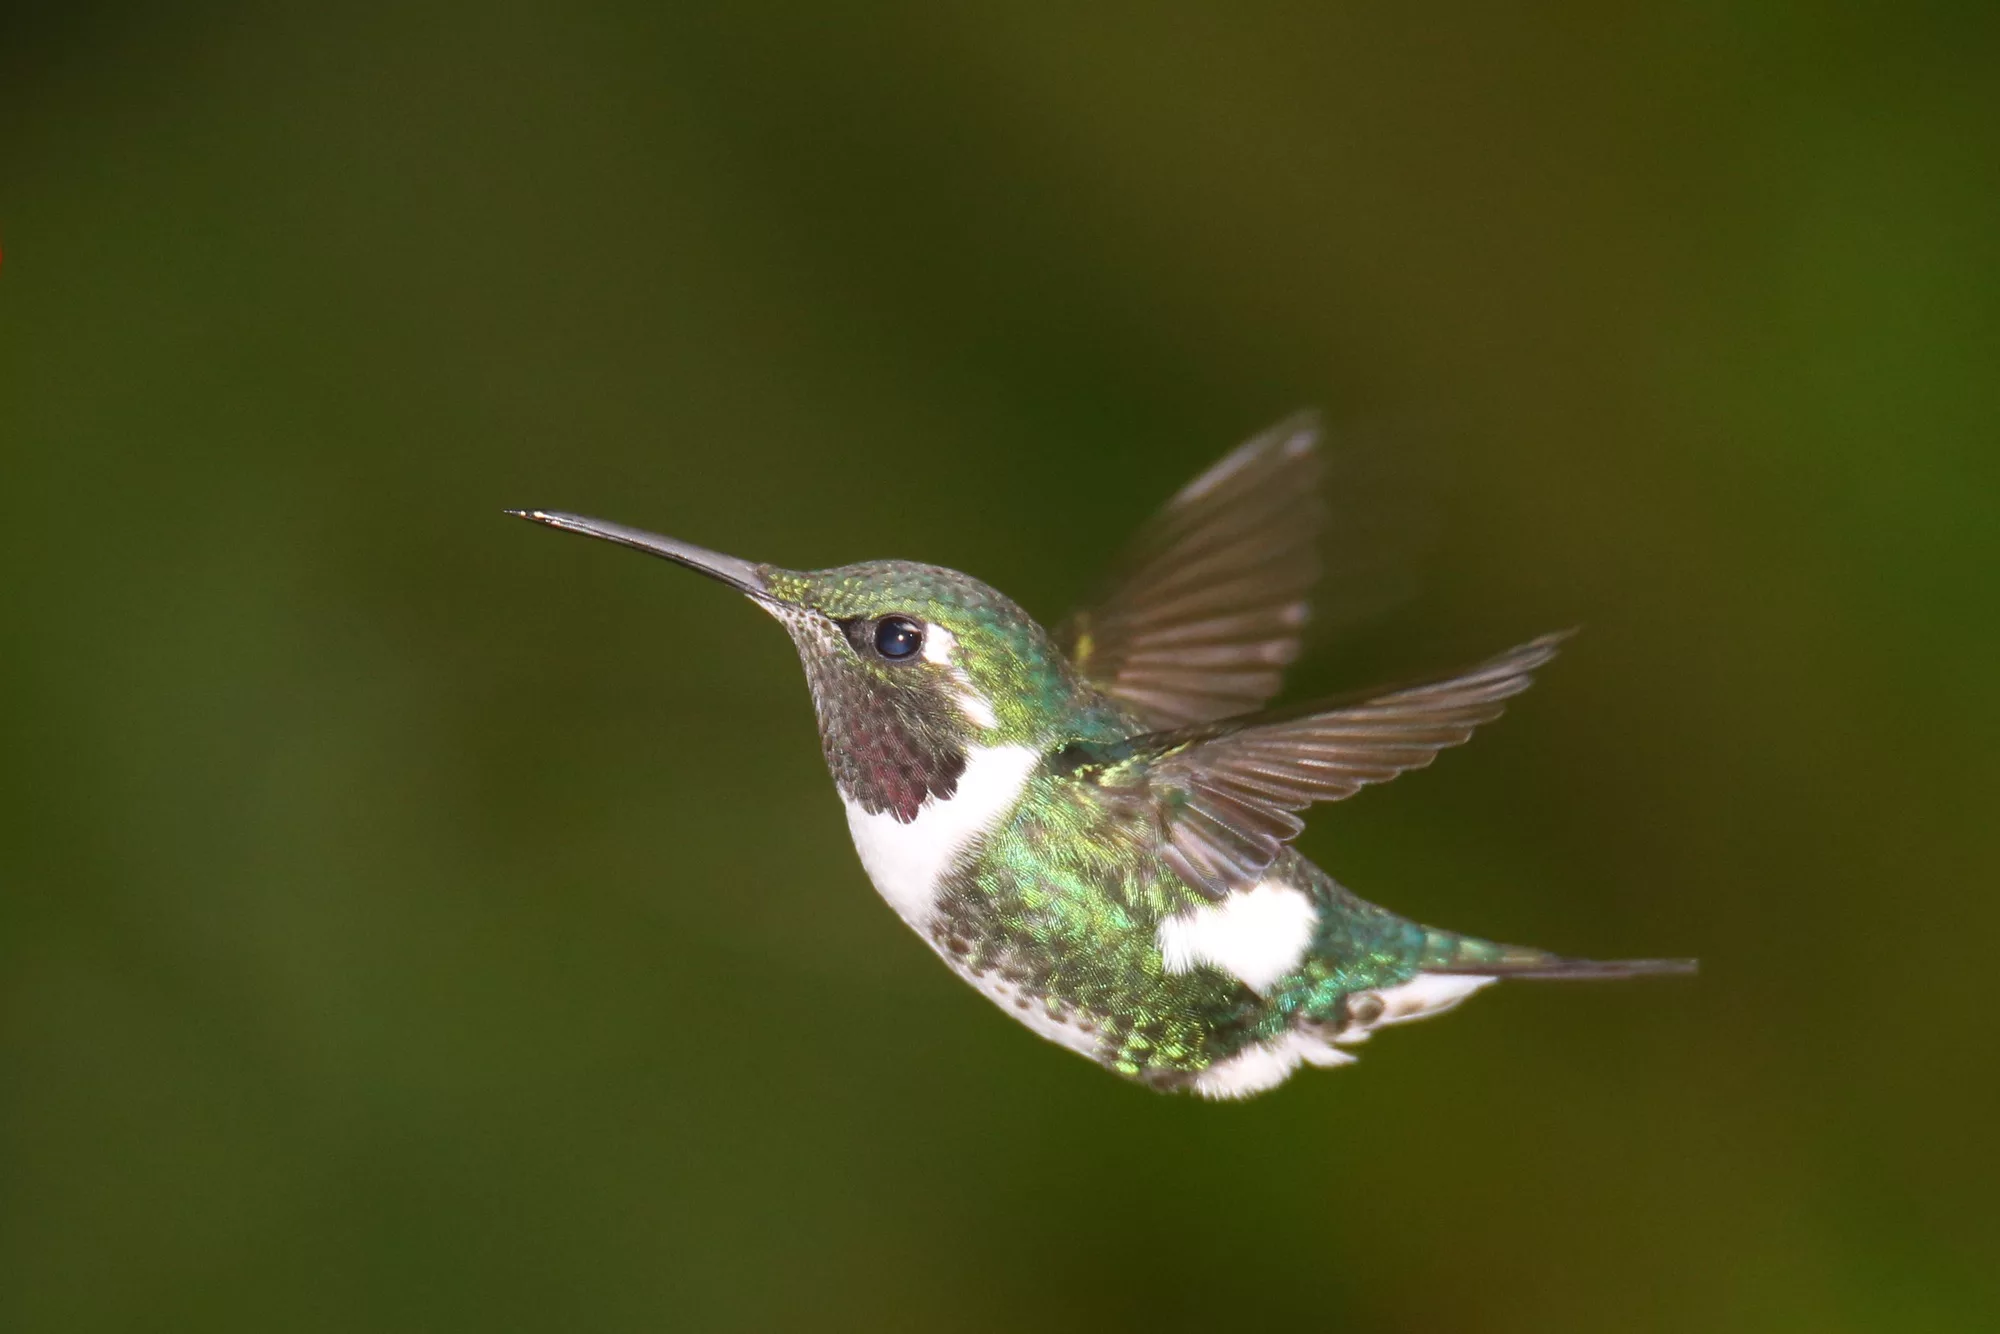 Ecuador wildlife photography safari, hummingbird